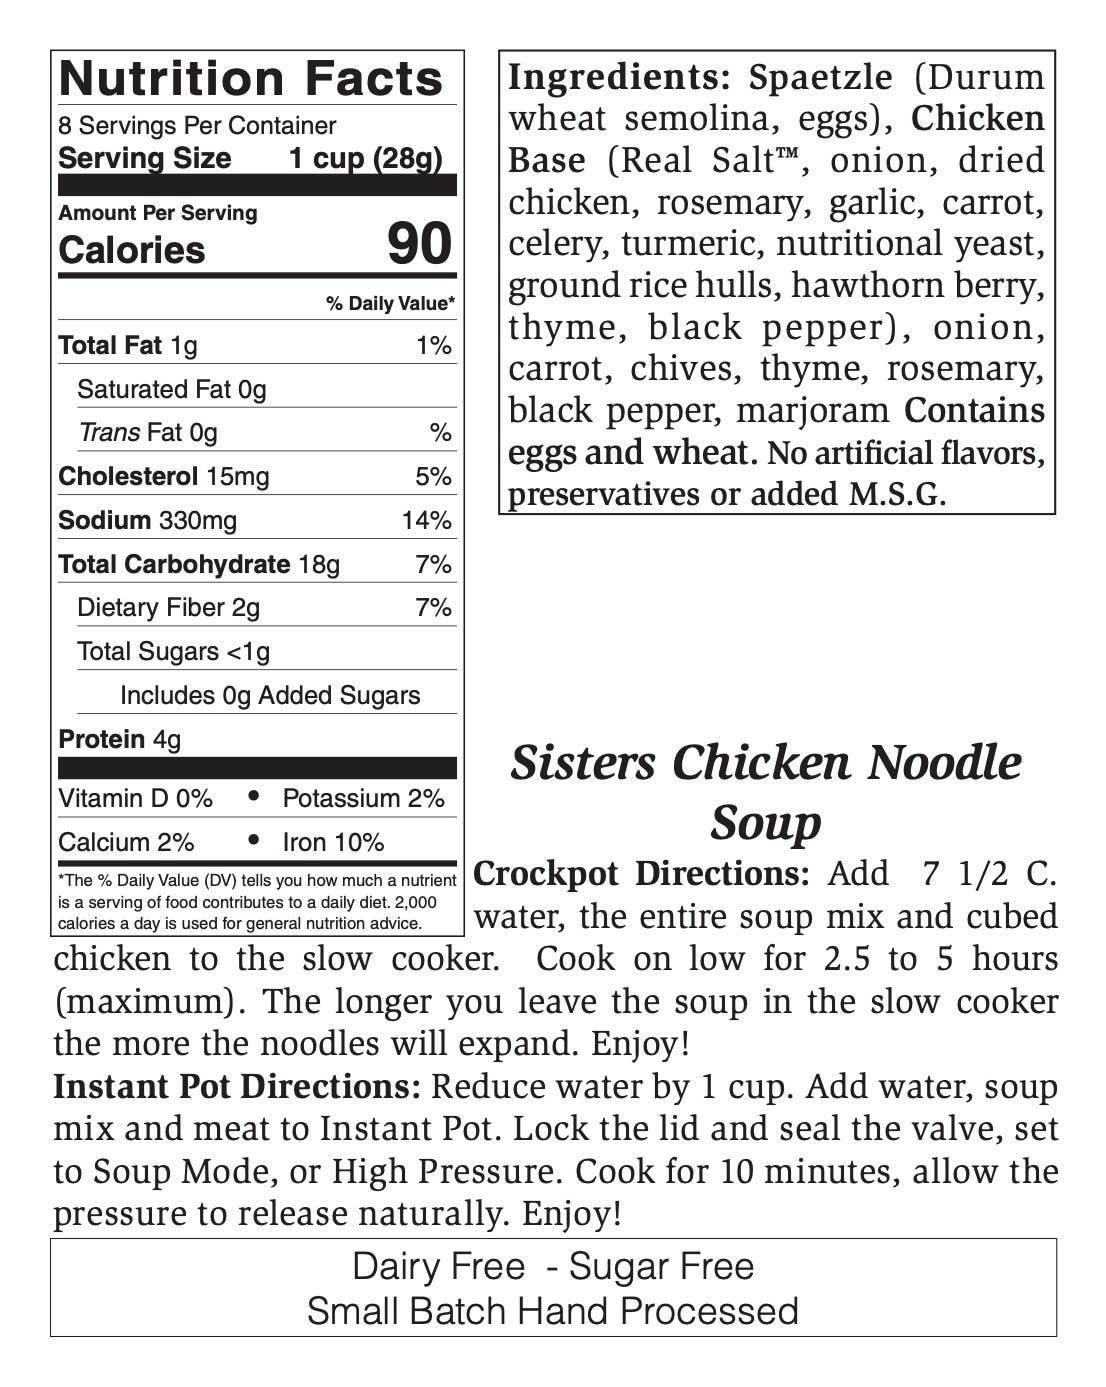 Sisters Chicken Noodle Soup Mix